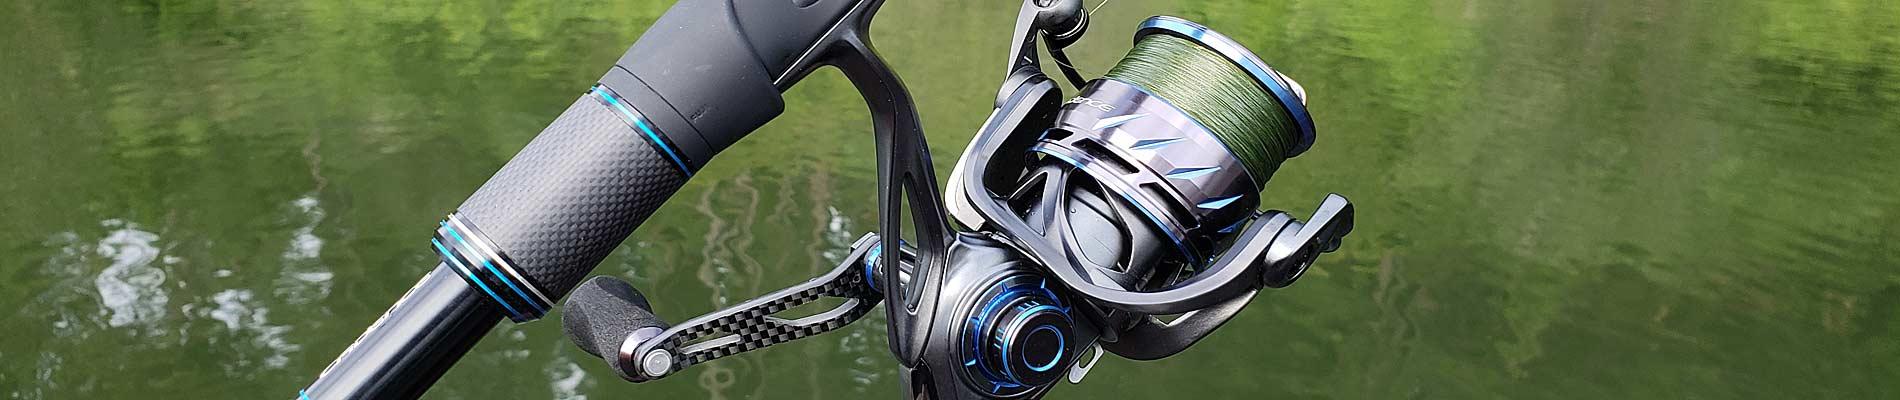 Fly Fishing Combo Bass Medium Power Fishing Rod & Reel Combos for